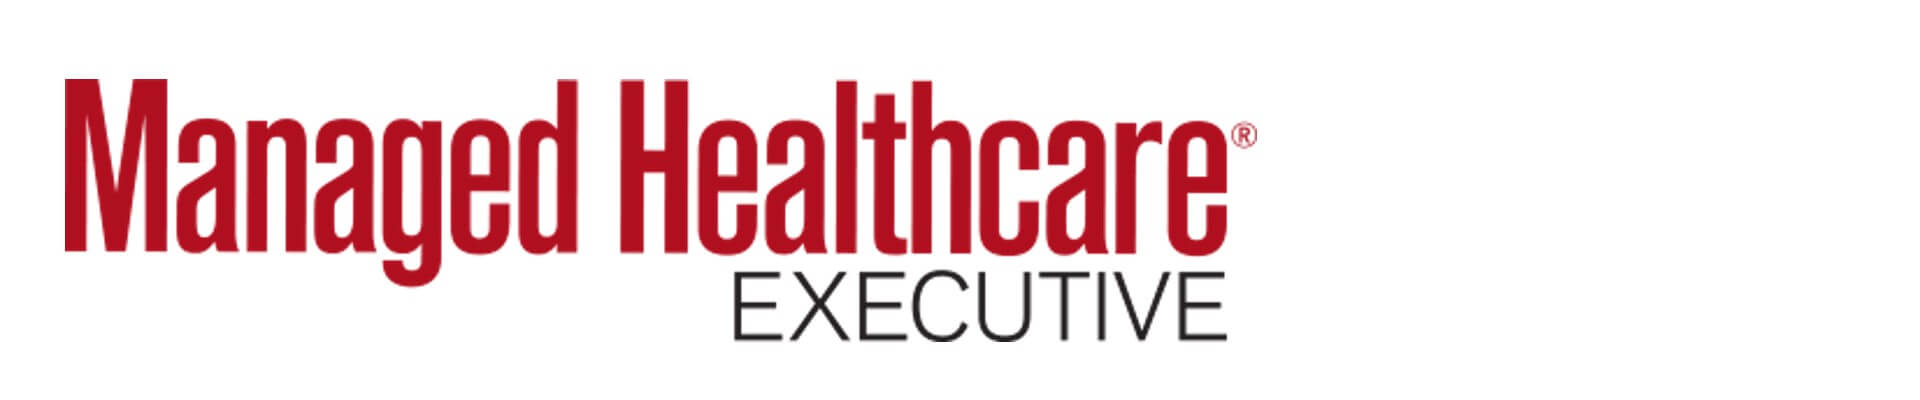 Managed Healthcare Executive logo